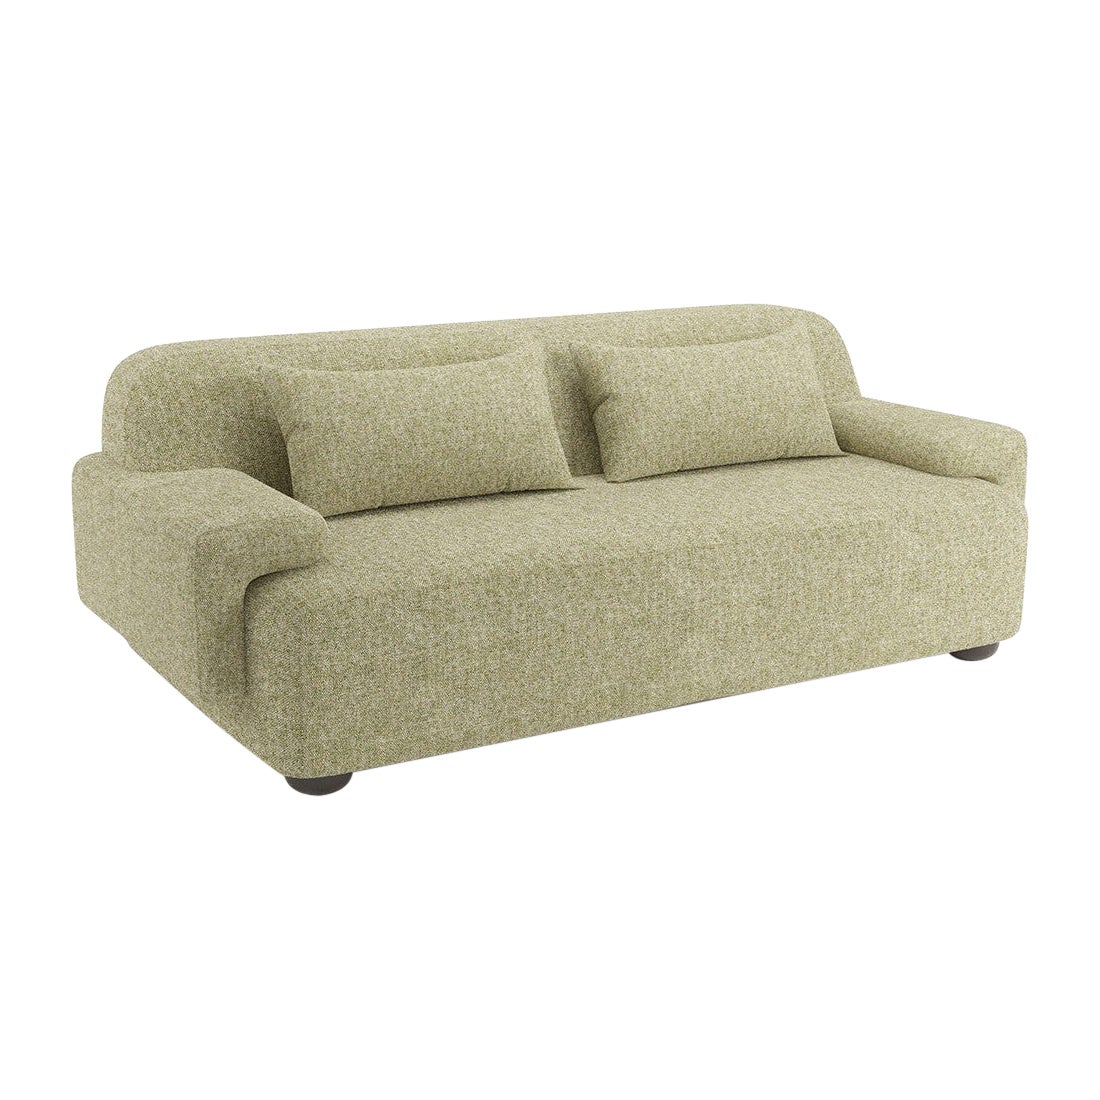 Popus Editions Lena 2.5 Seater Sofa in Cactus London Linen Fabric